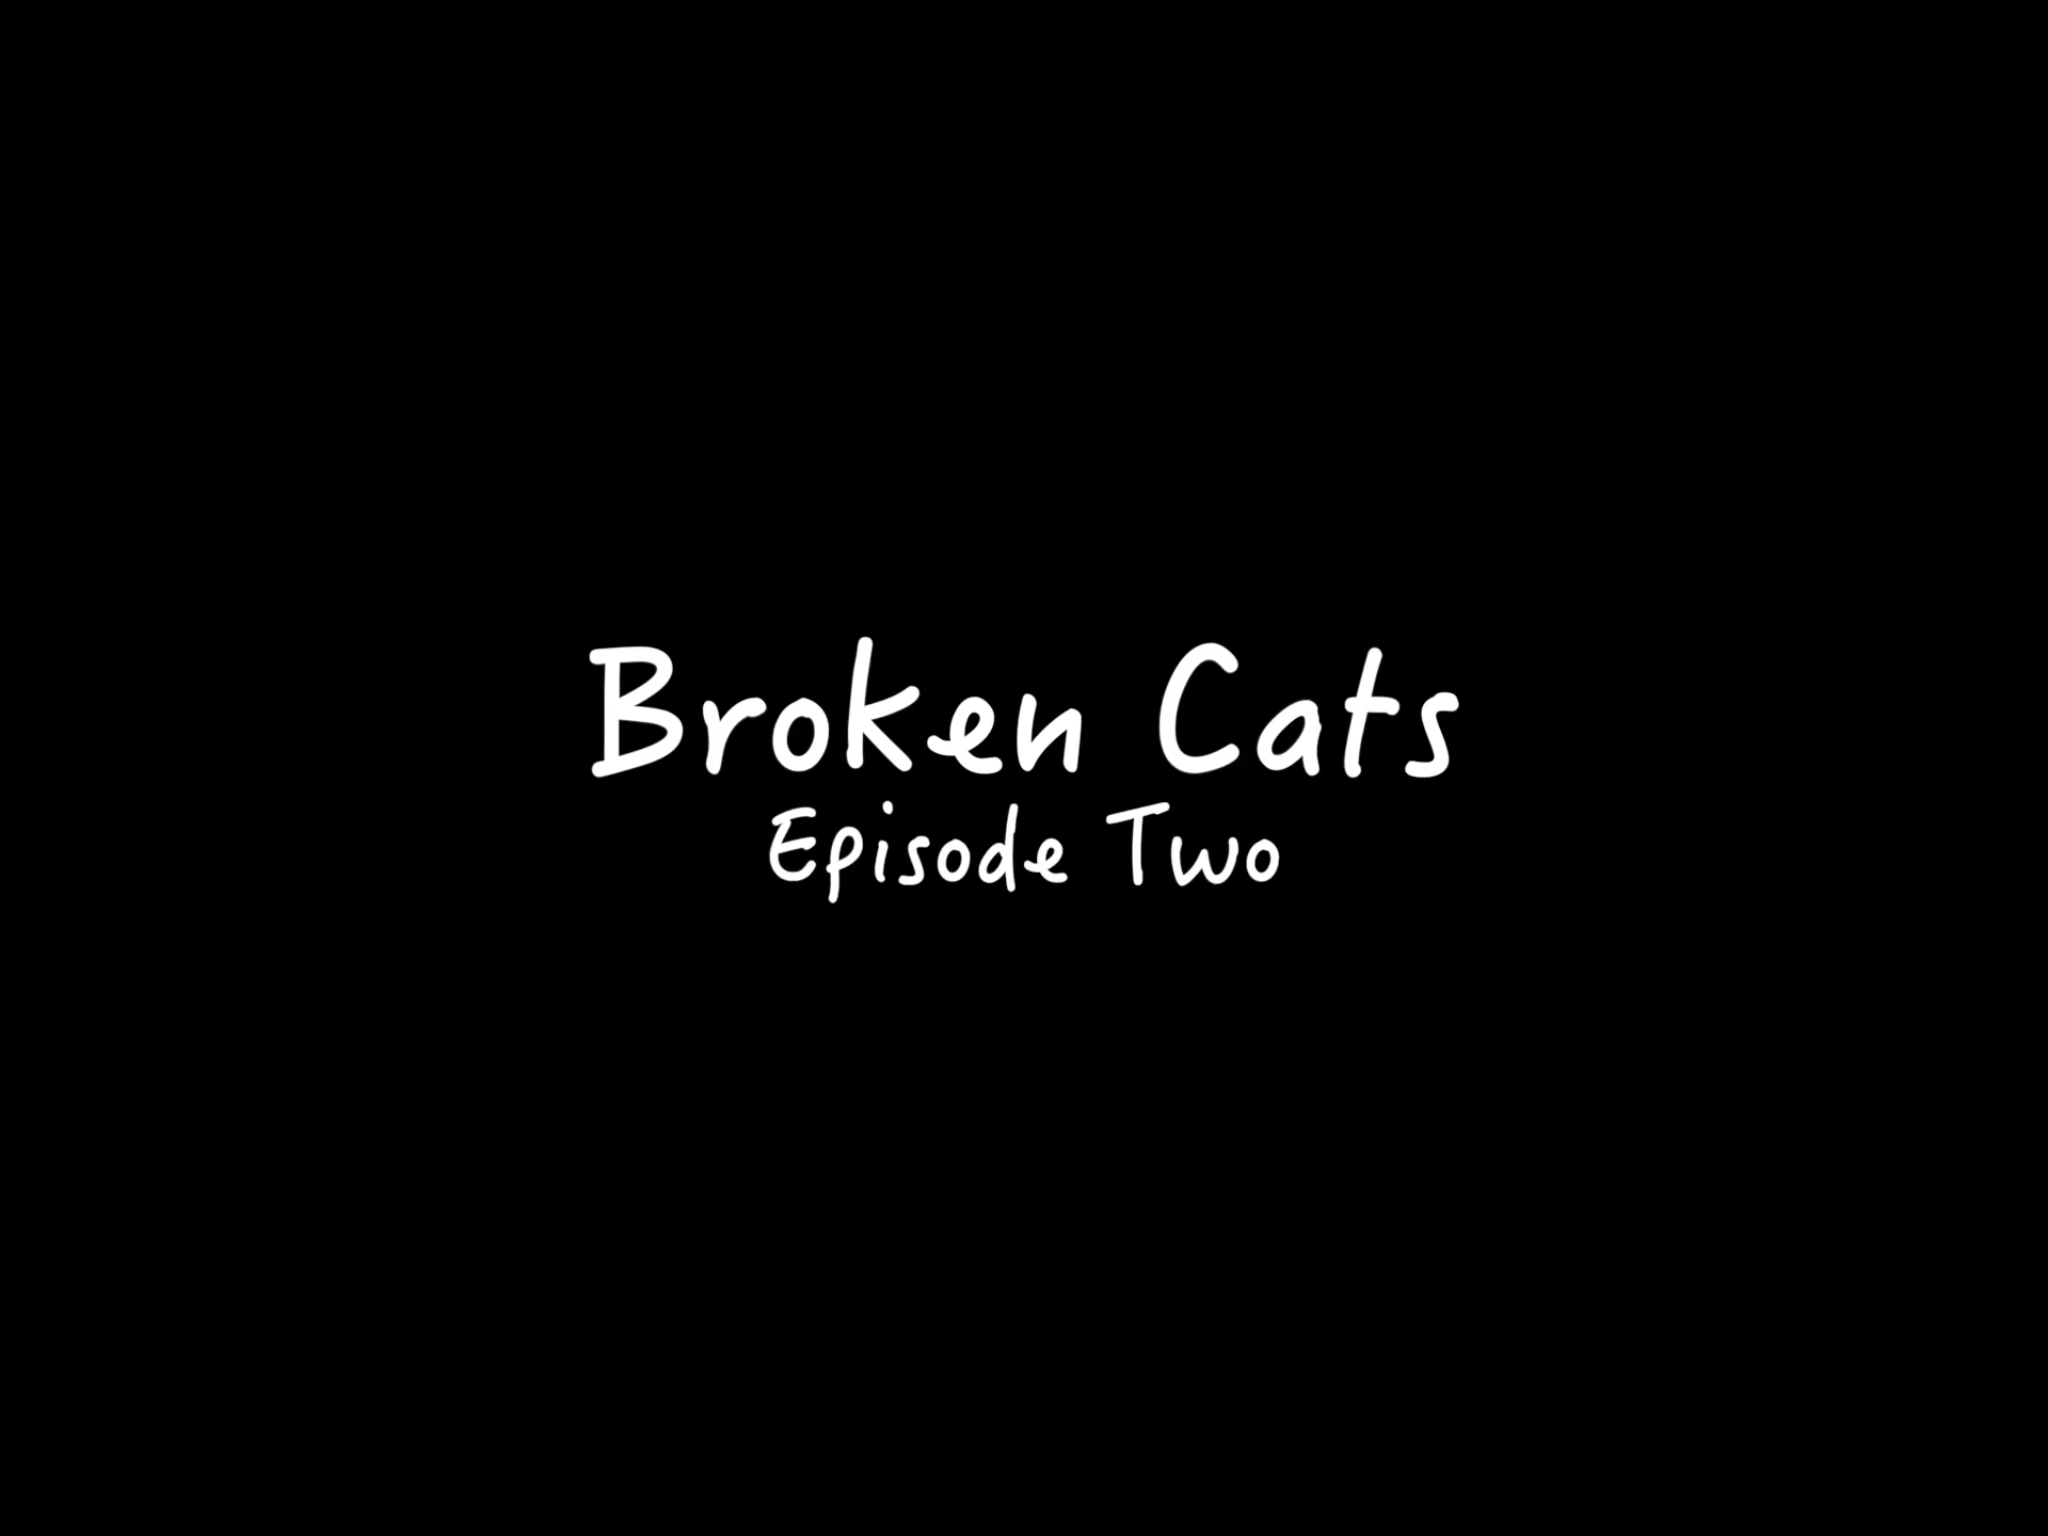 Broken cats episode 2 title.png